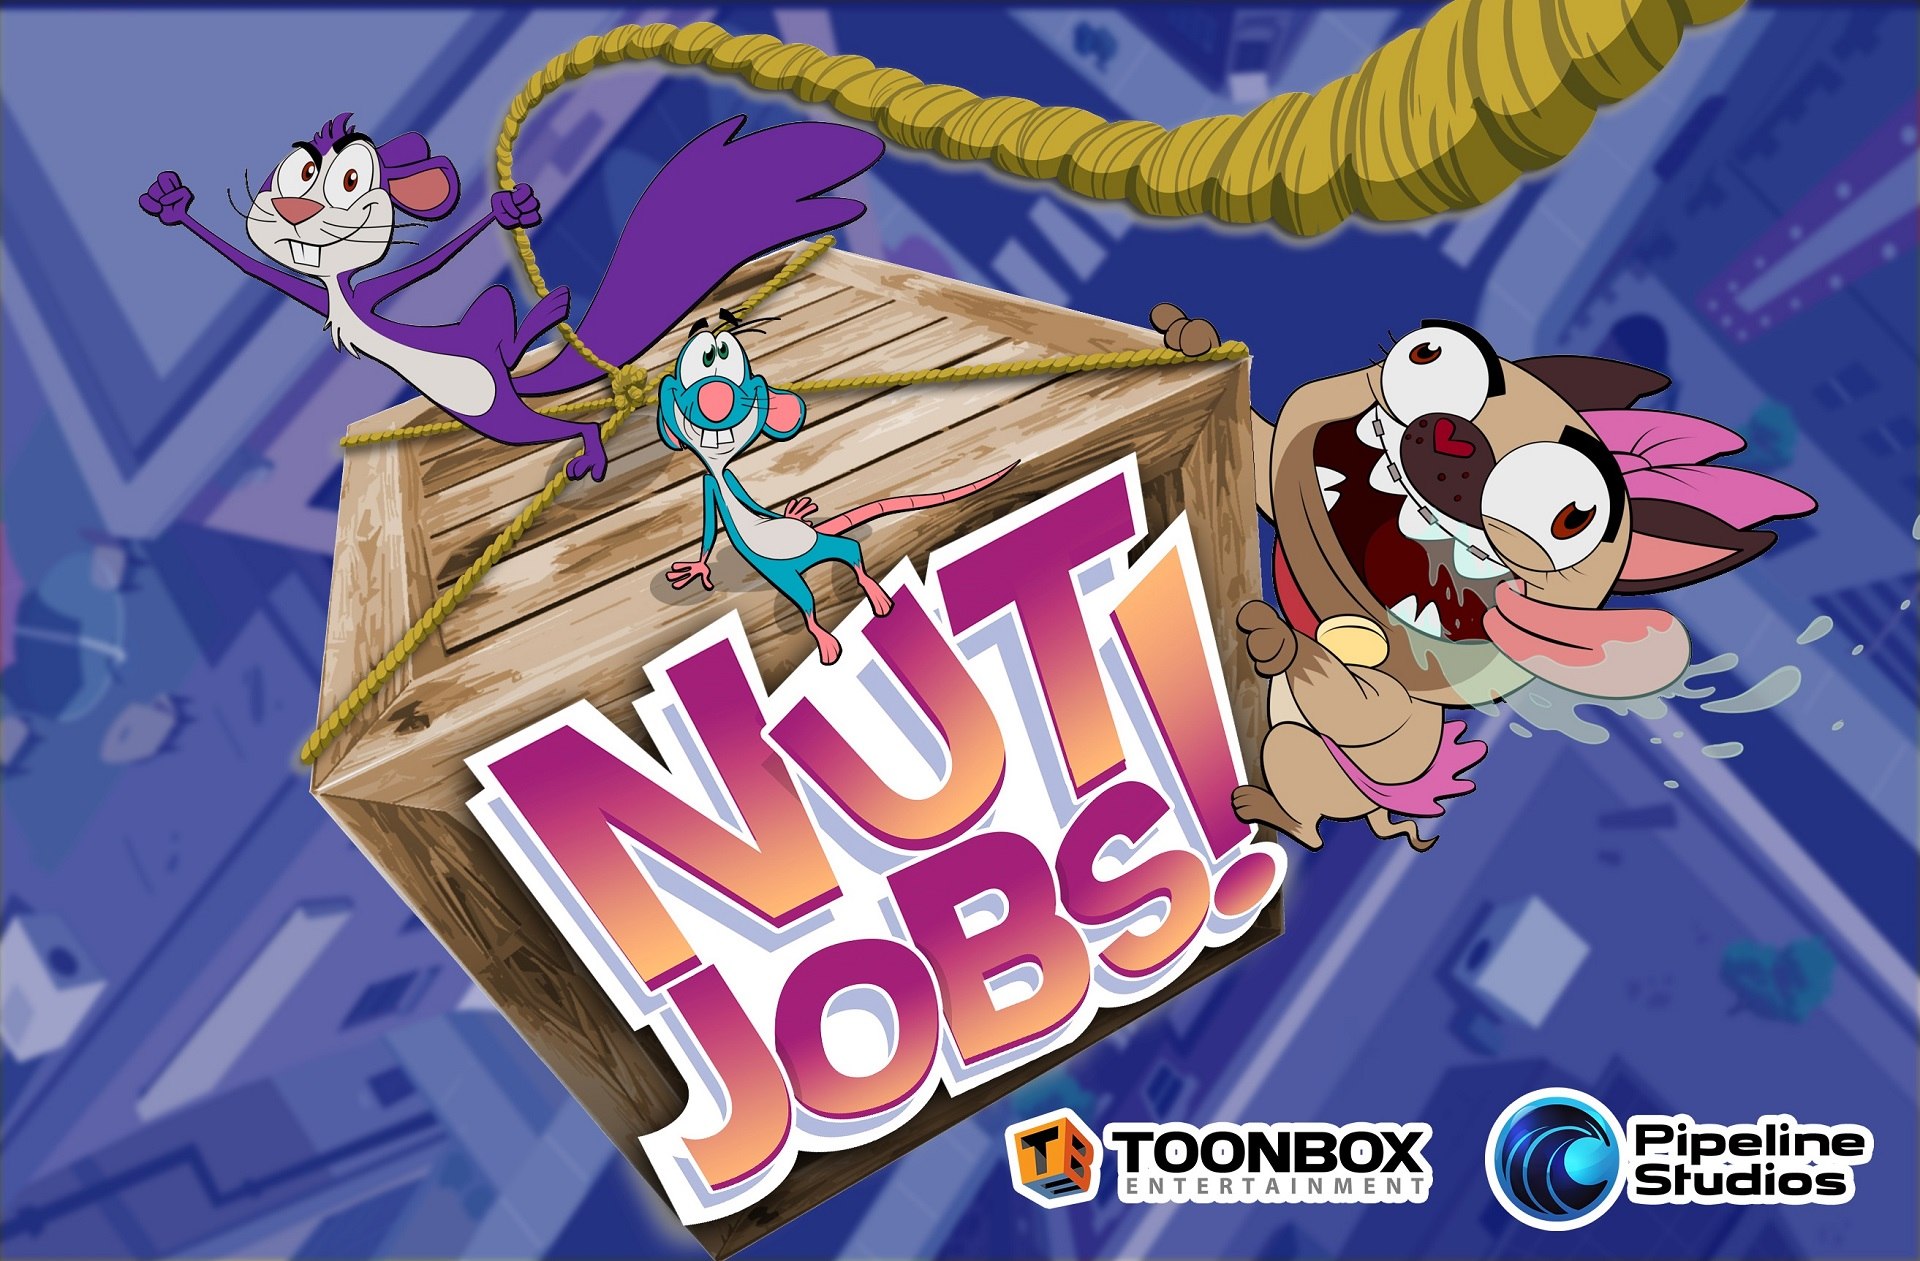 Pipeline Studios, ToonBox Entertainment Developing 'Nut Job' TV Series |  Animation World Network